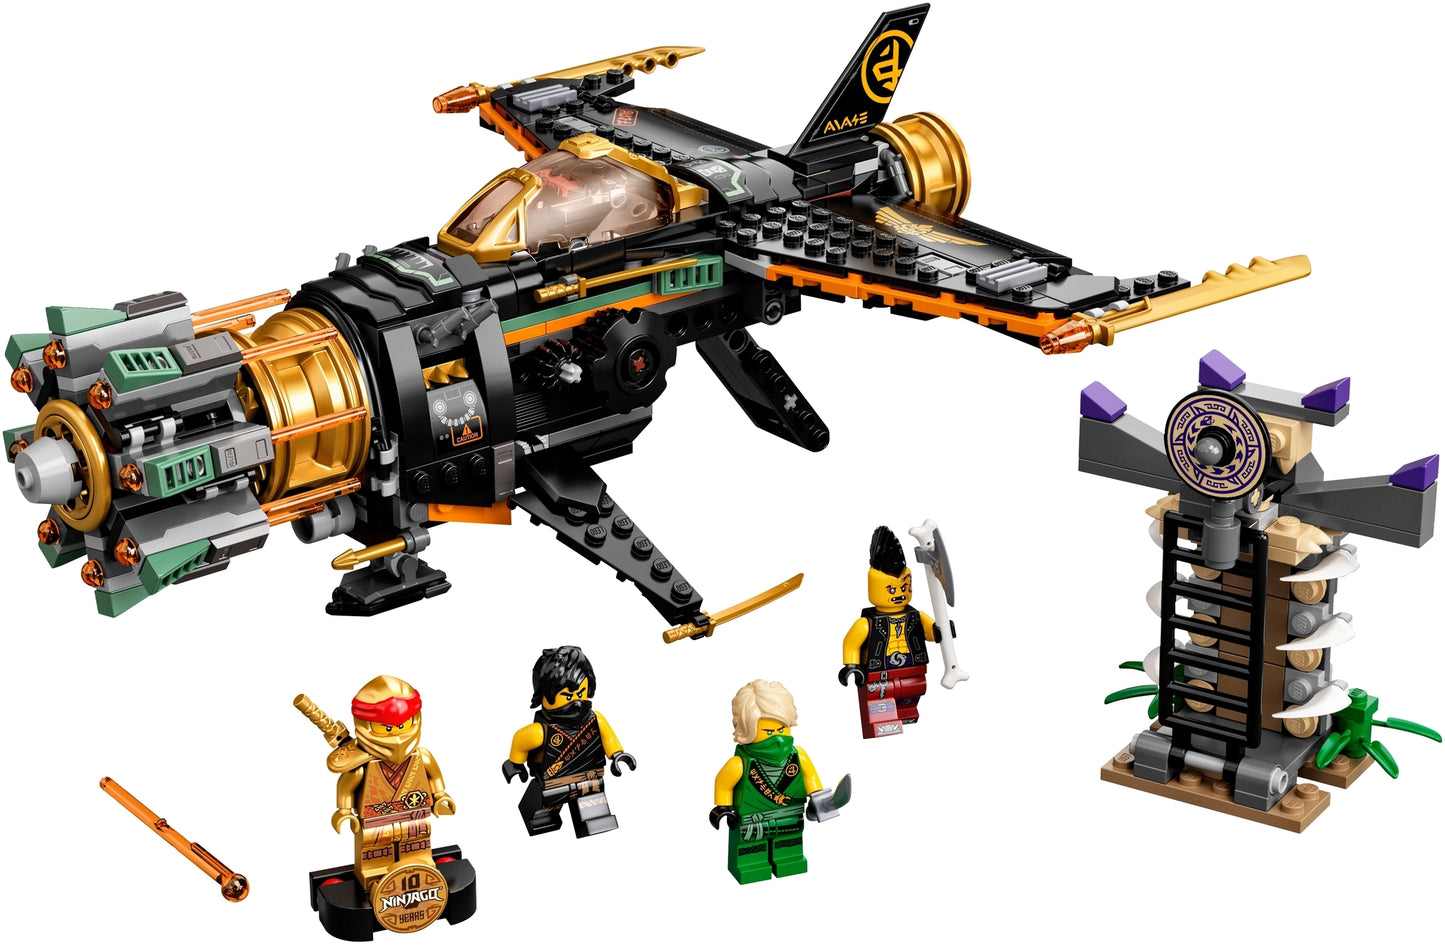 71736 LEGO Ninjago - Spara Missili